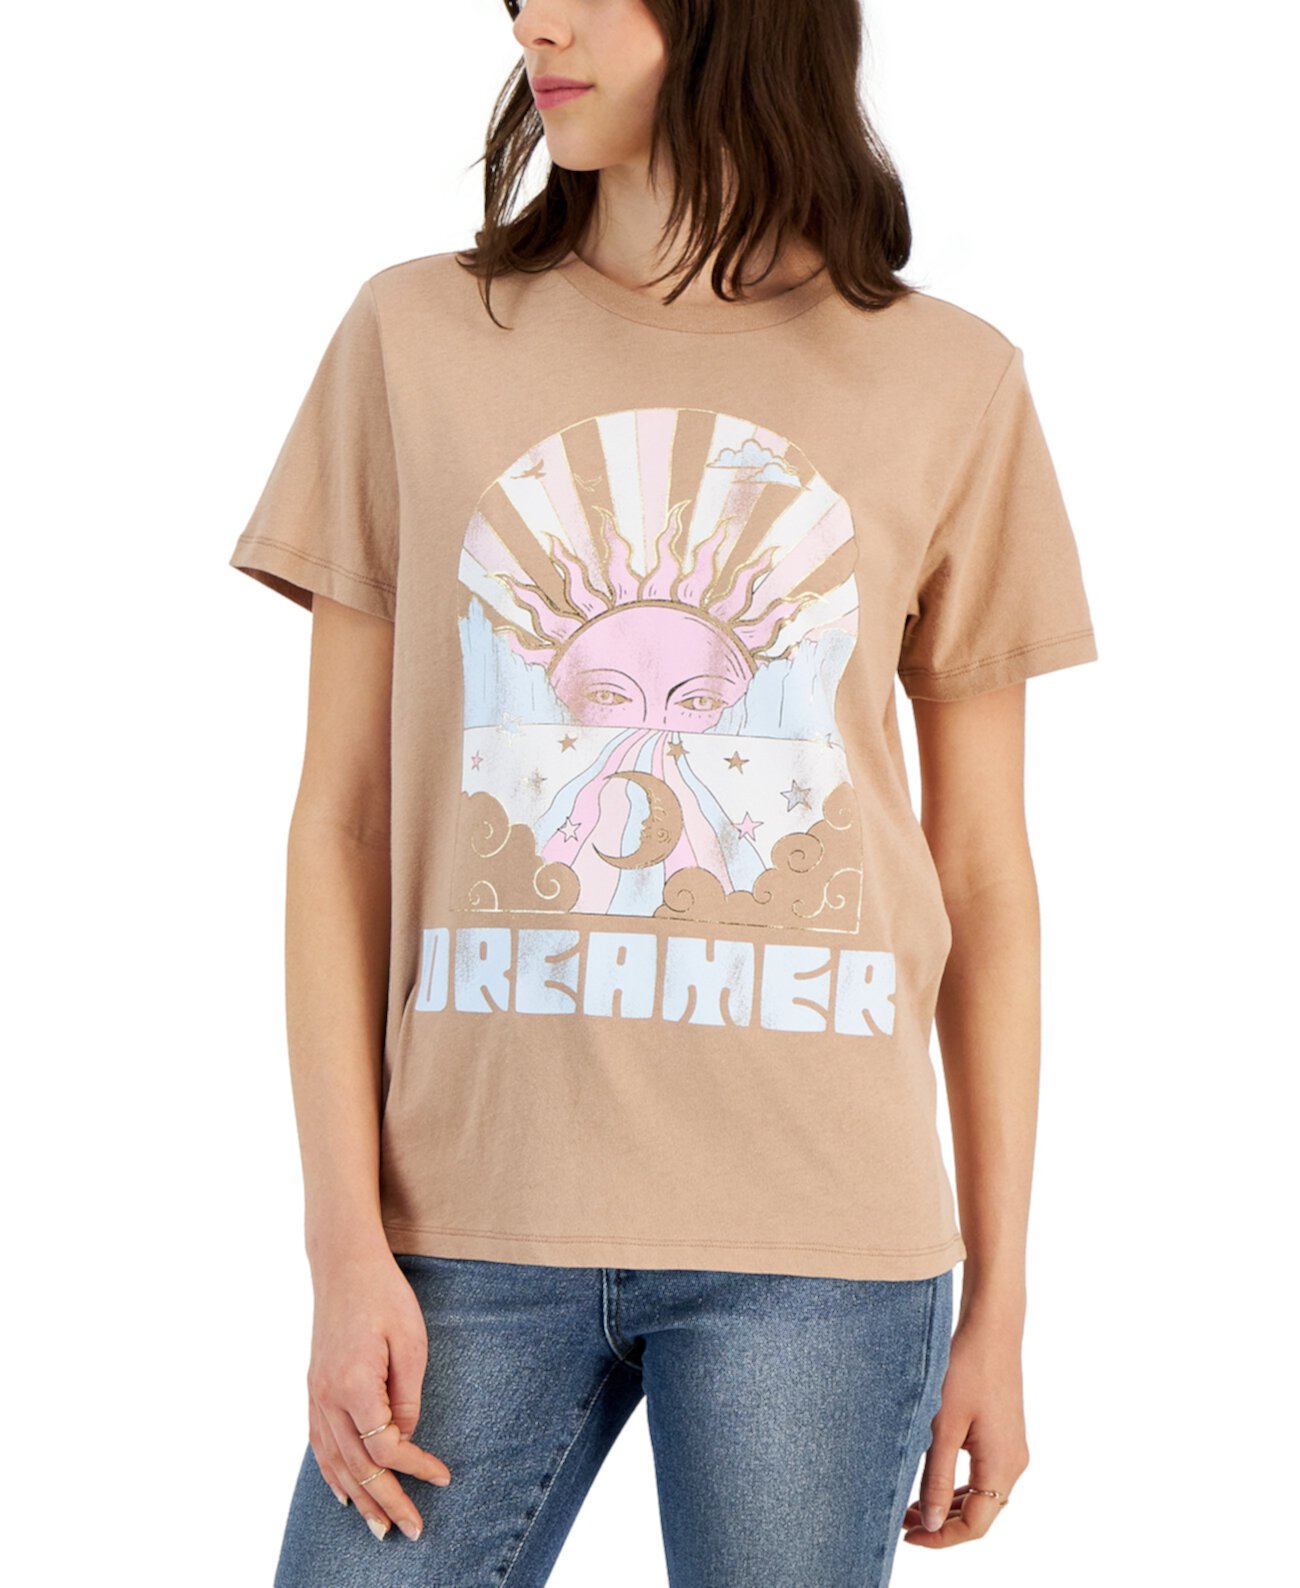 Хлопковая футболка с рисунком Celestial Dreamer для юниоров Grayson Threads, The Label